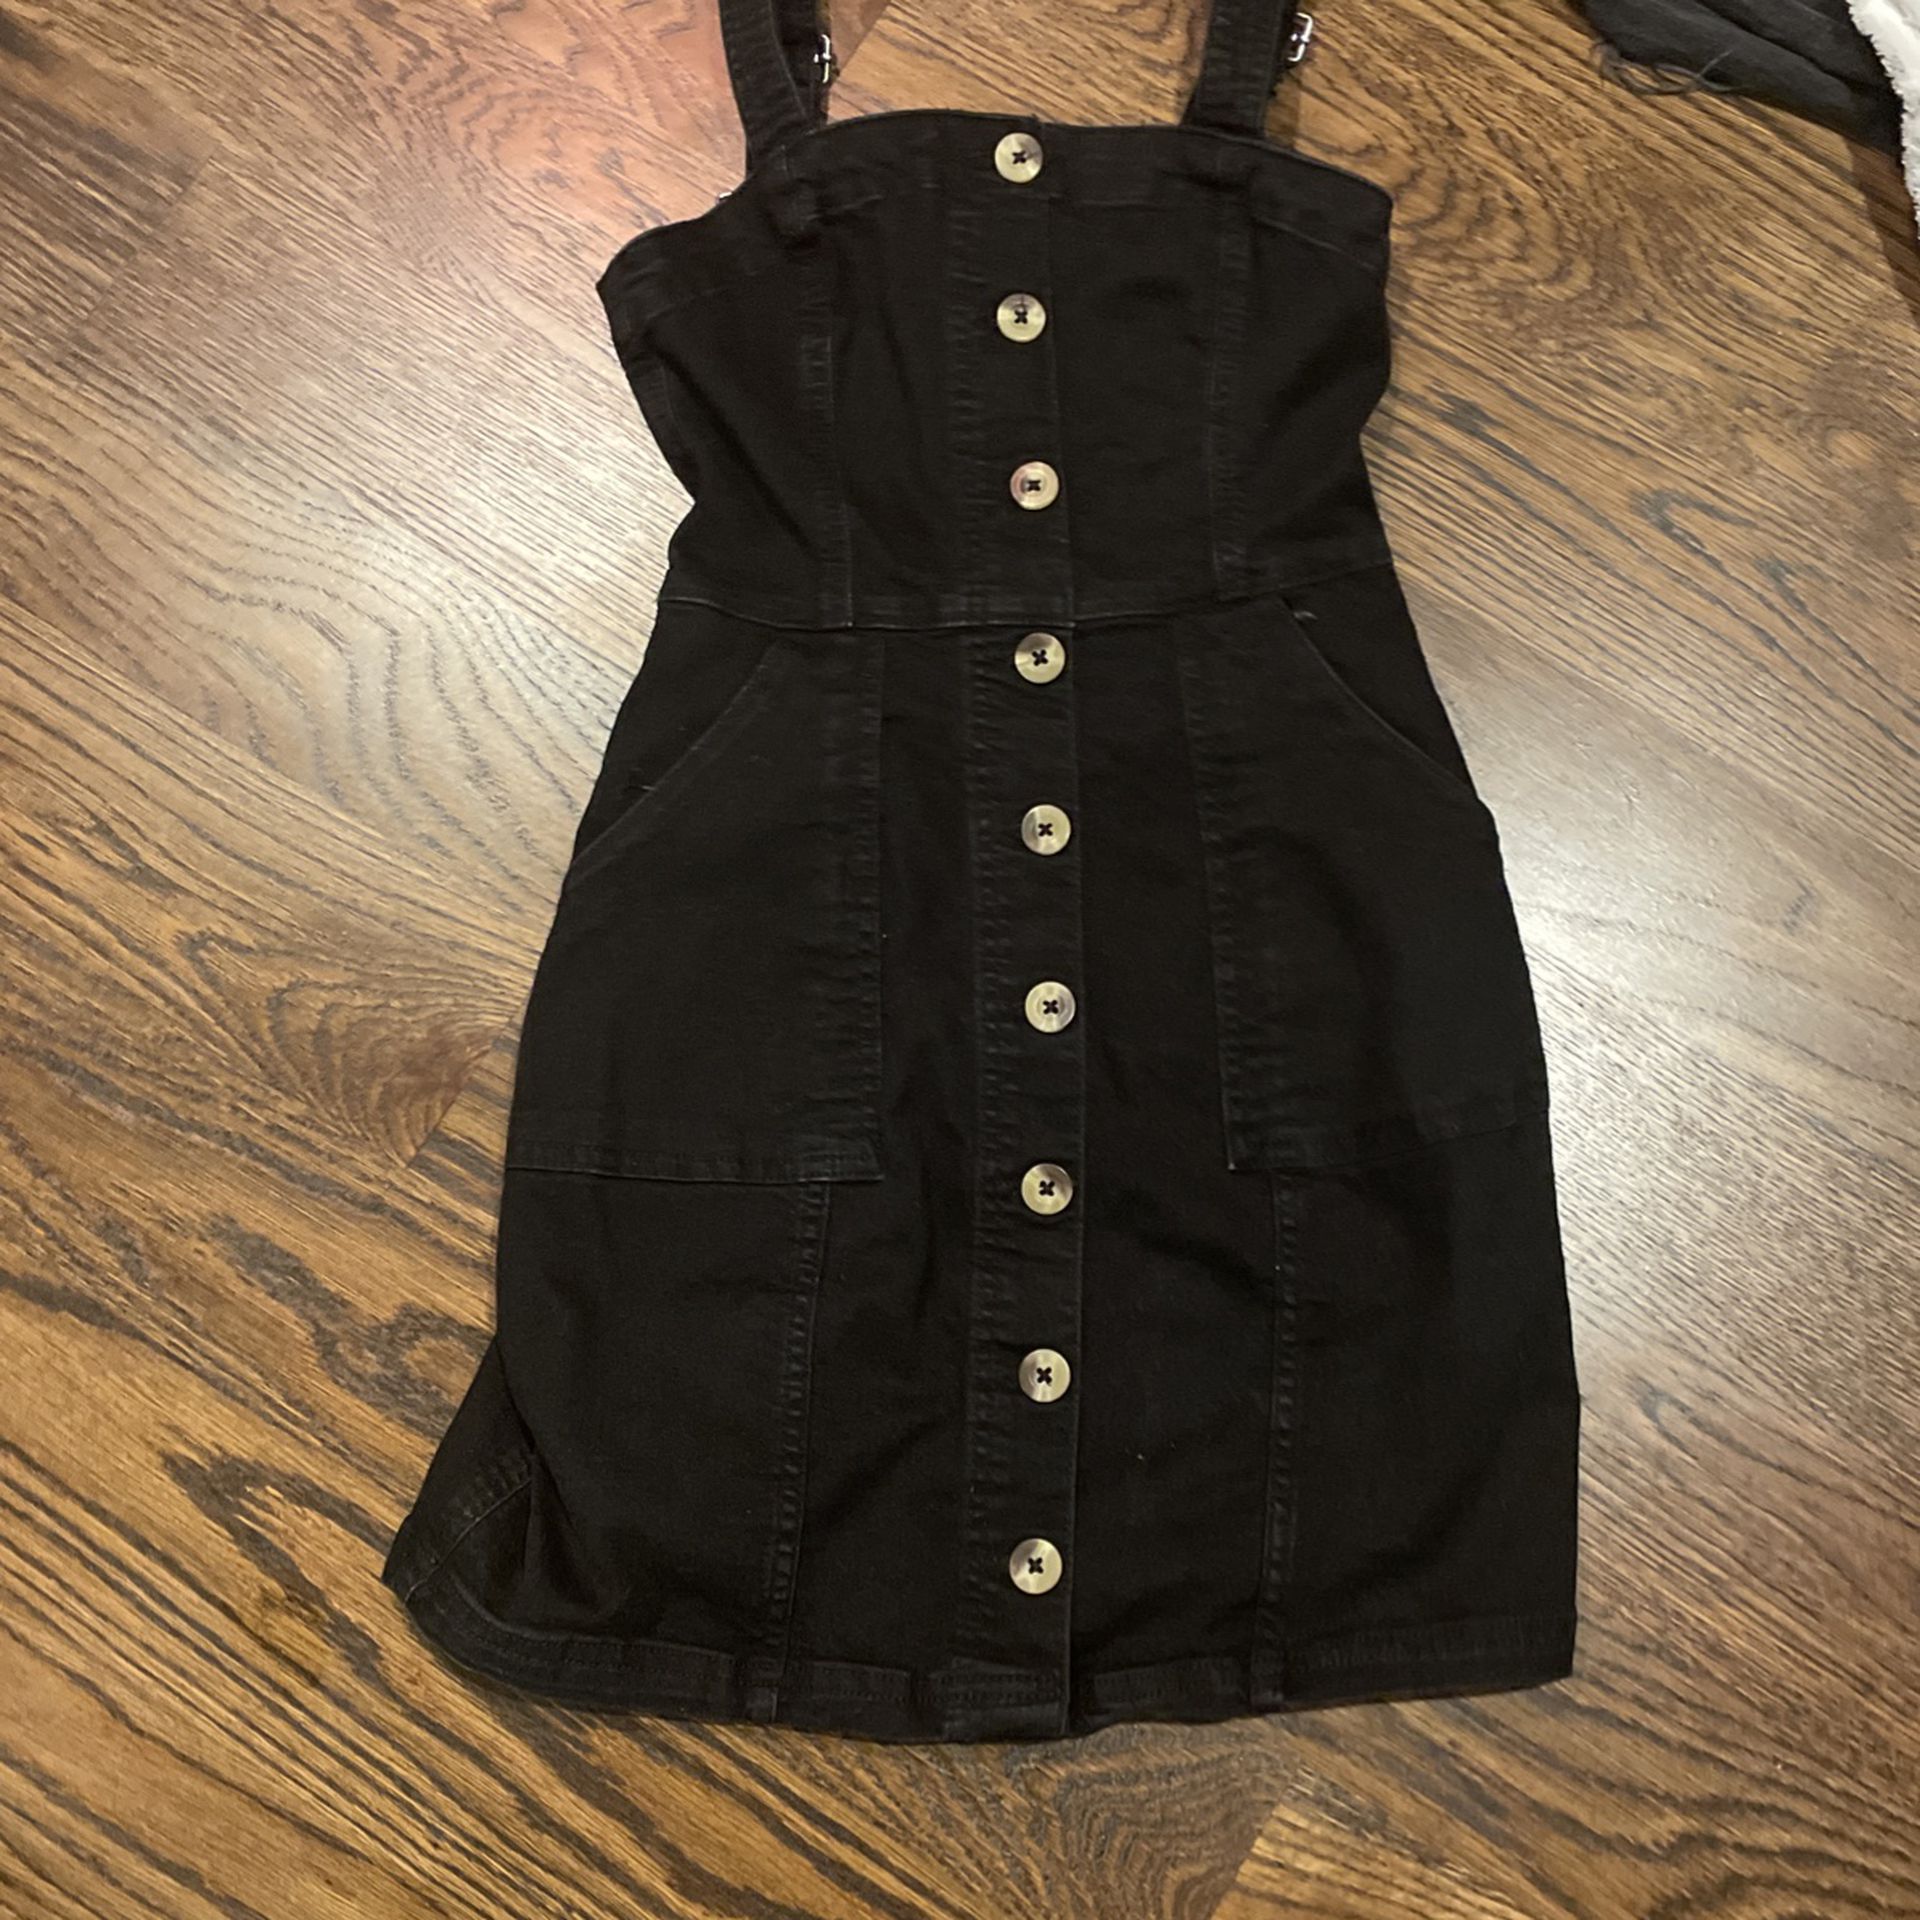 H&M OVERALL denim Black Dress  Size Small 